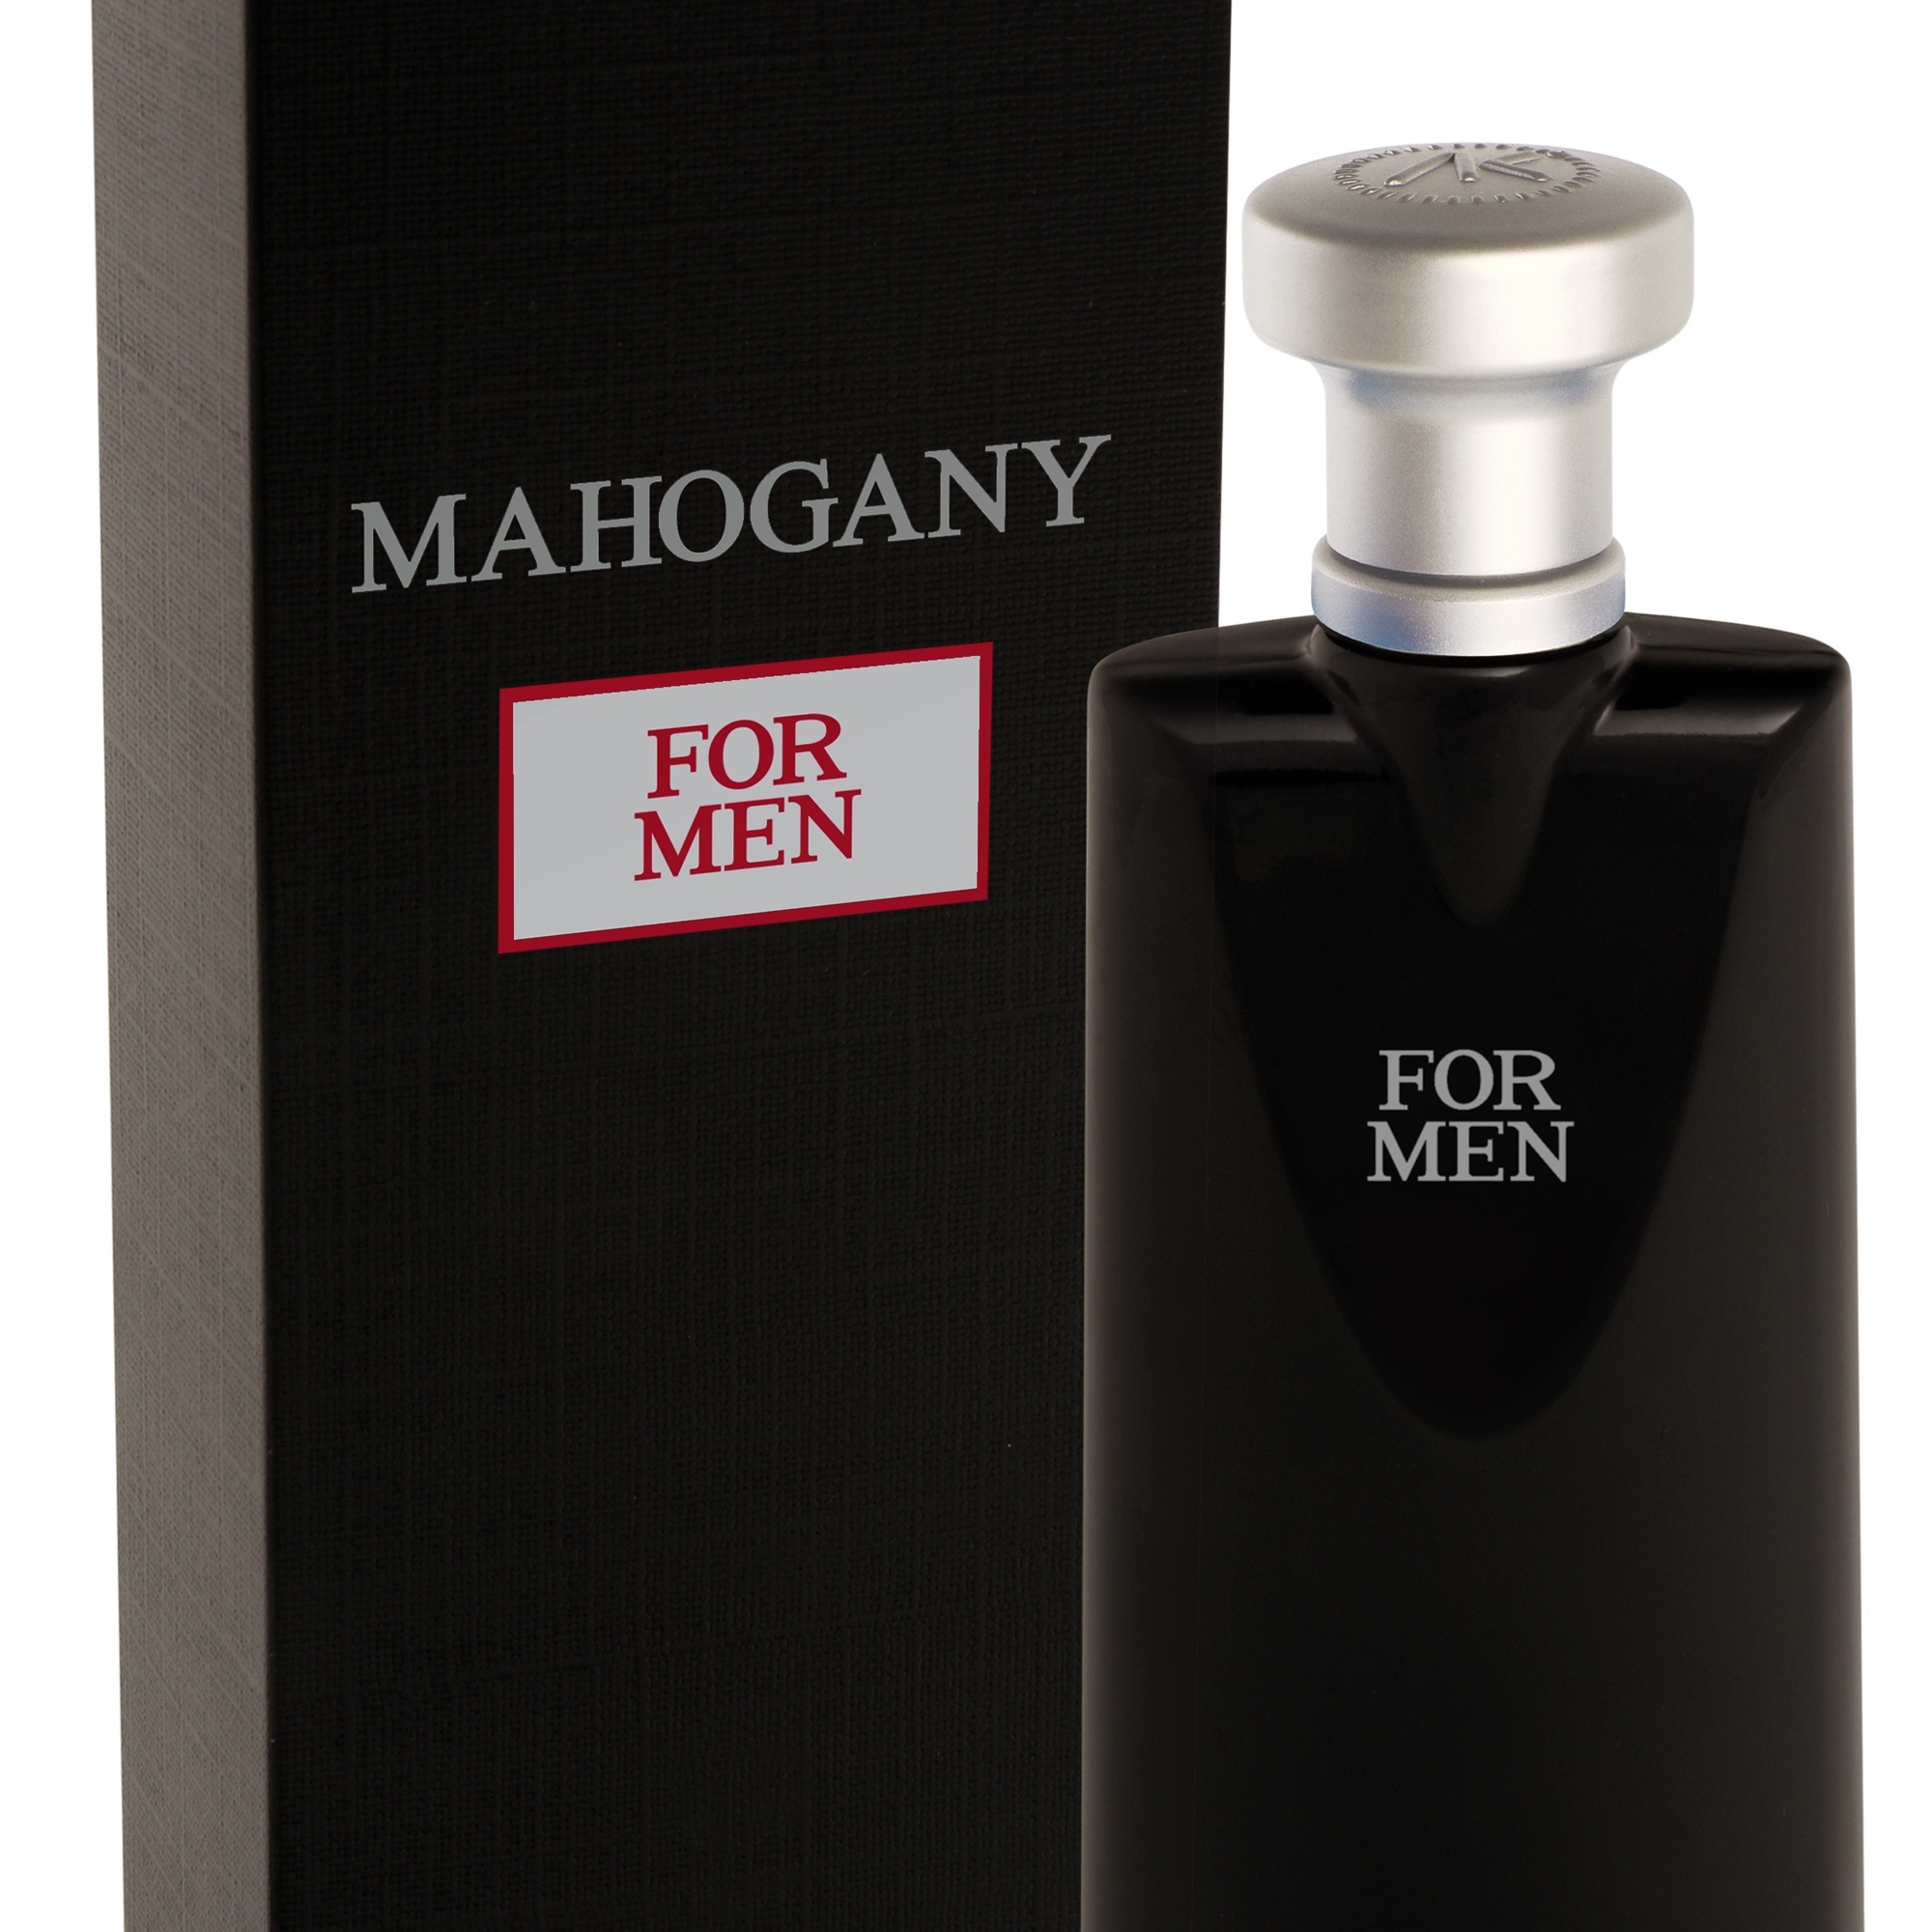 Mahogany for men